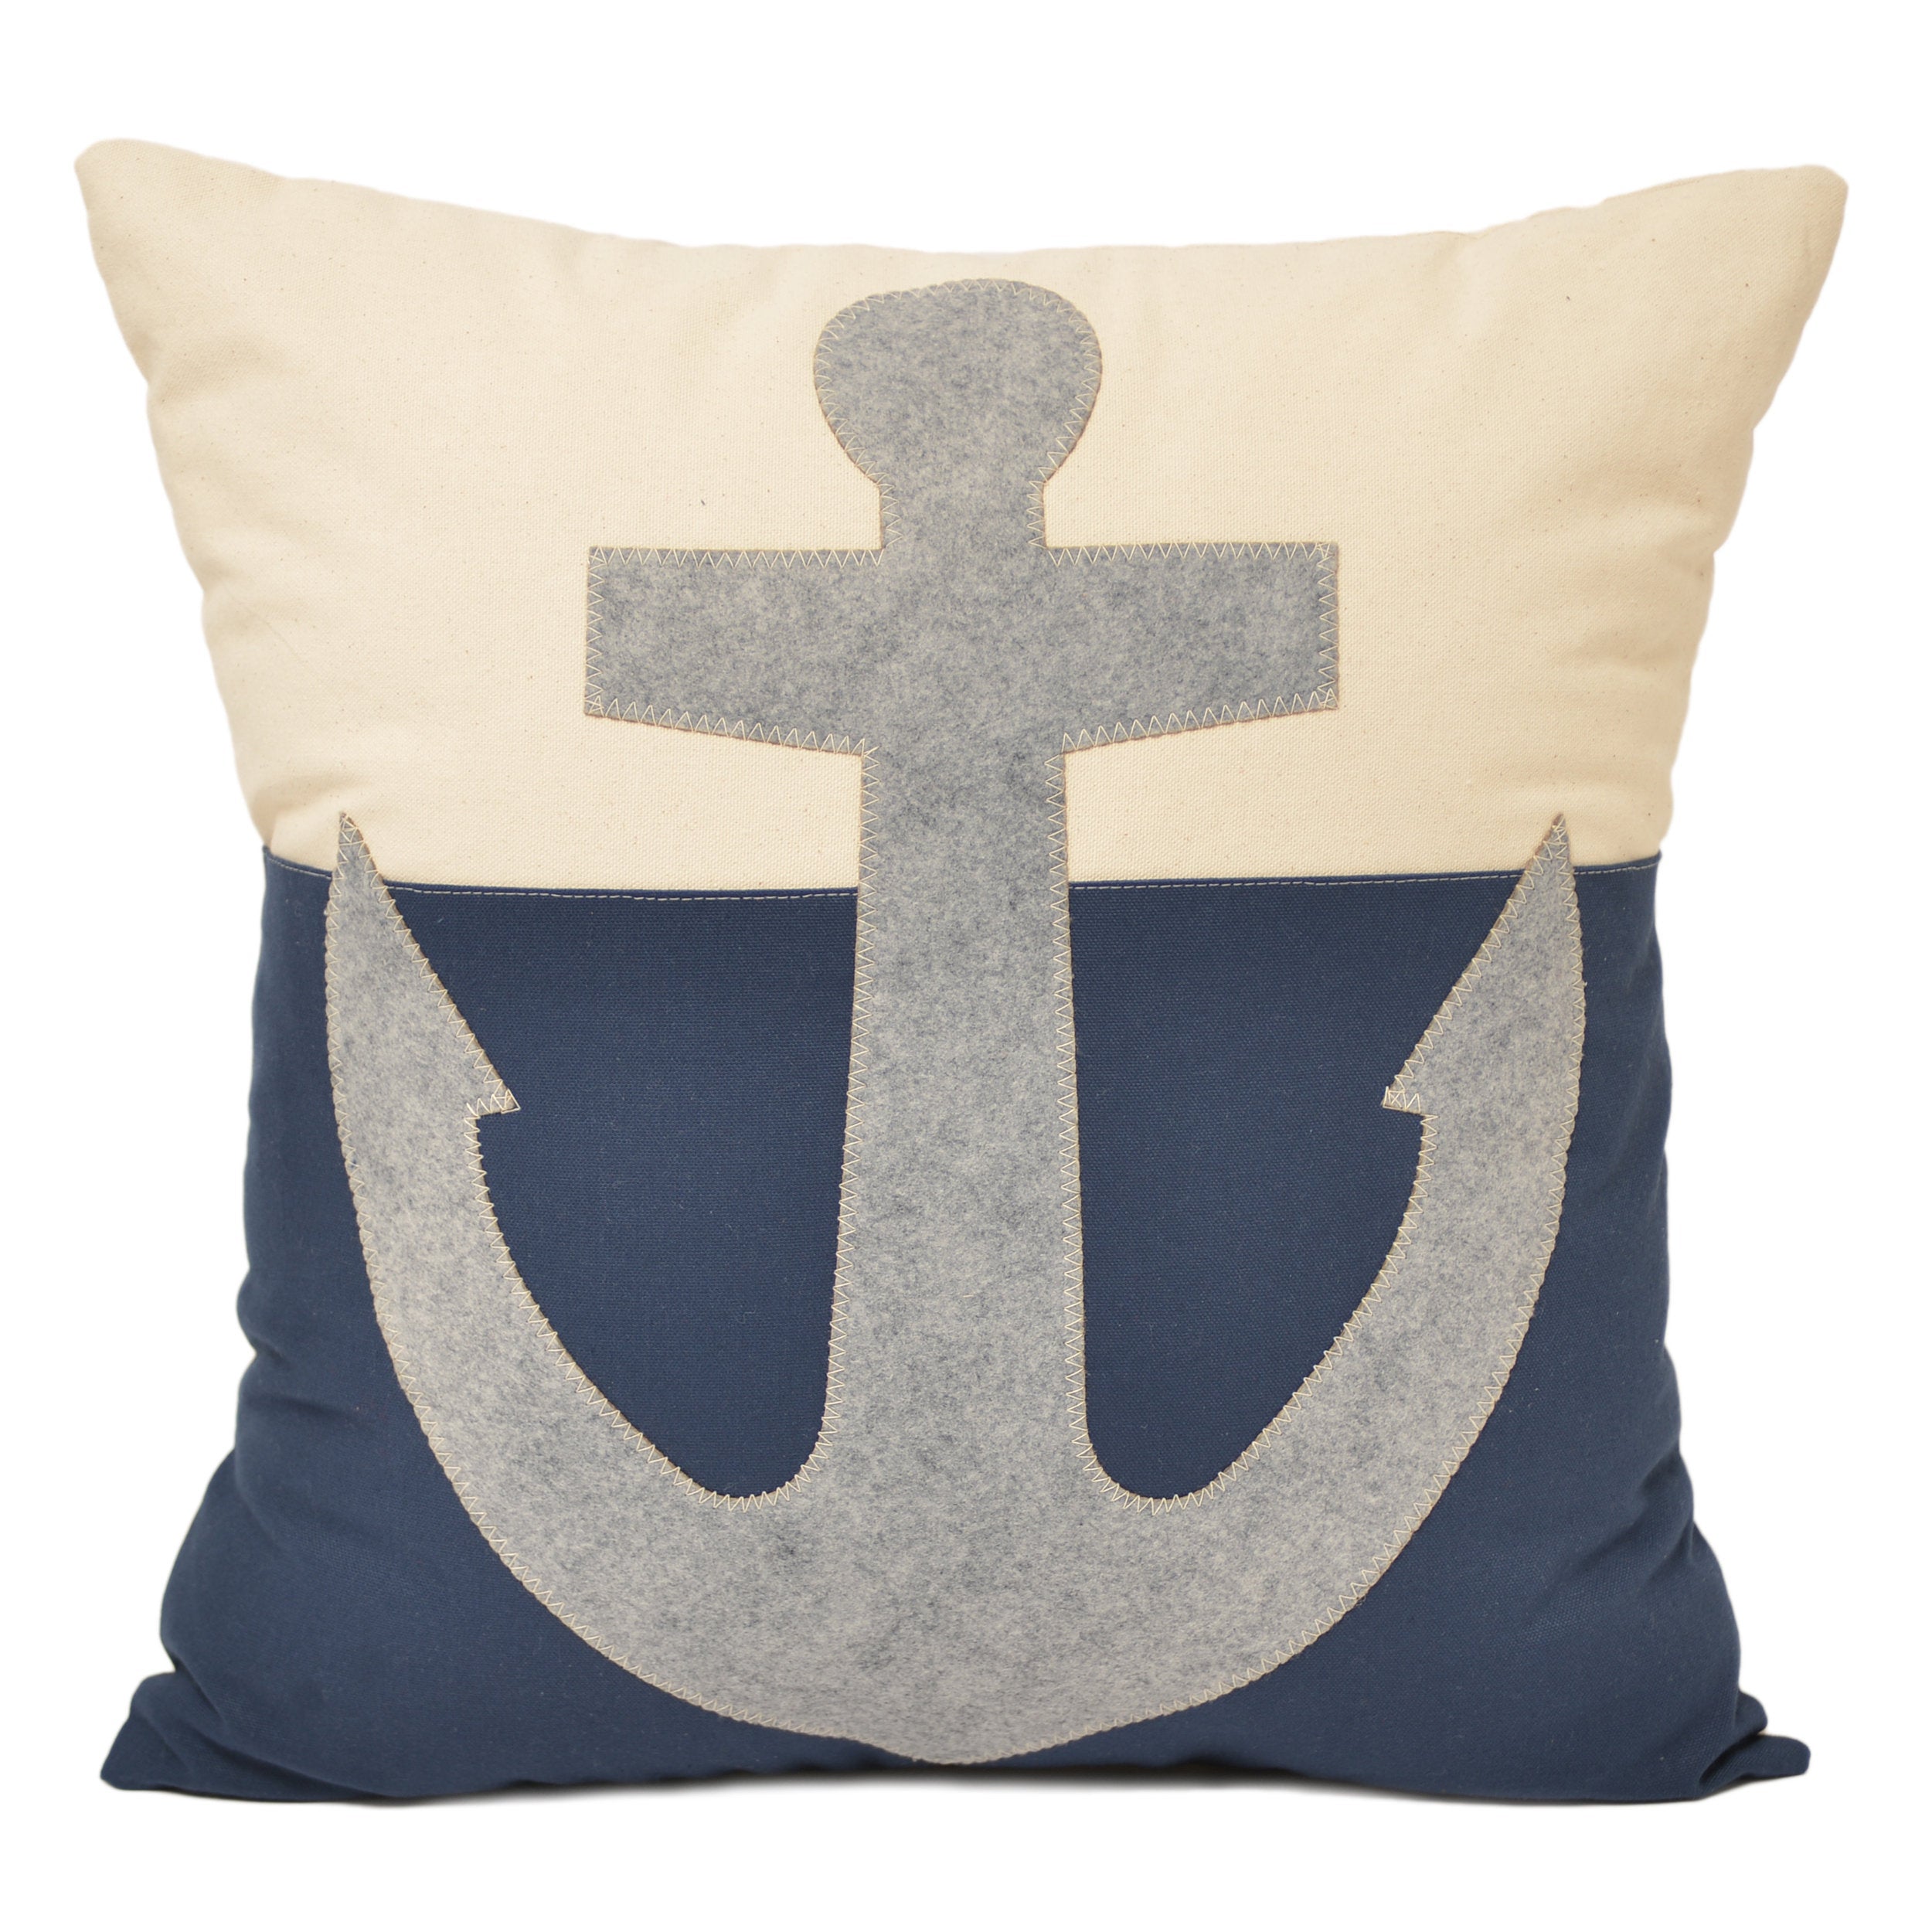 21" The Big Anchor Pillow - Grey on Navy Color Block